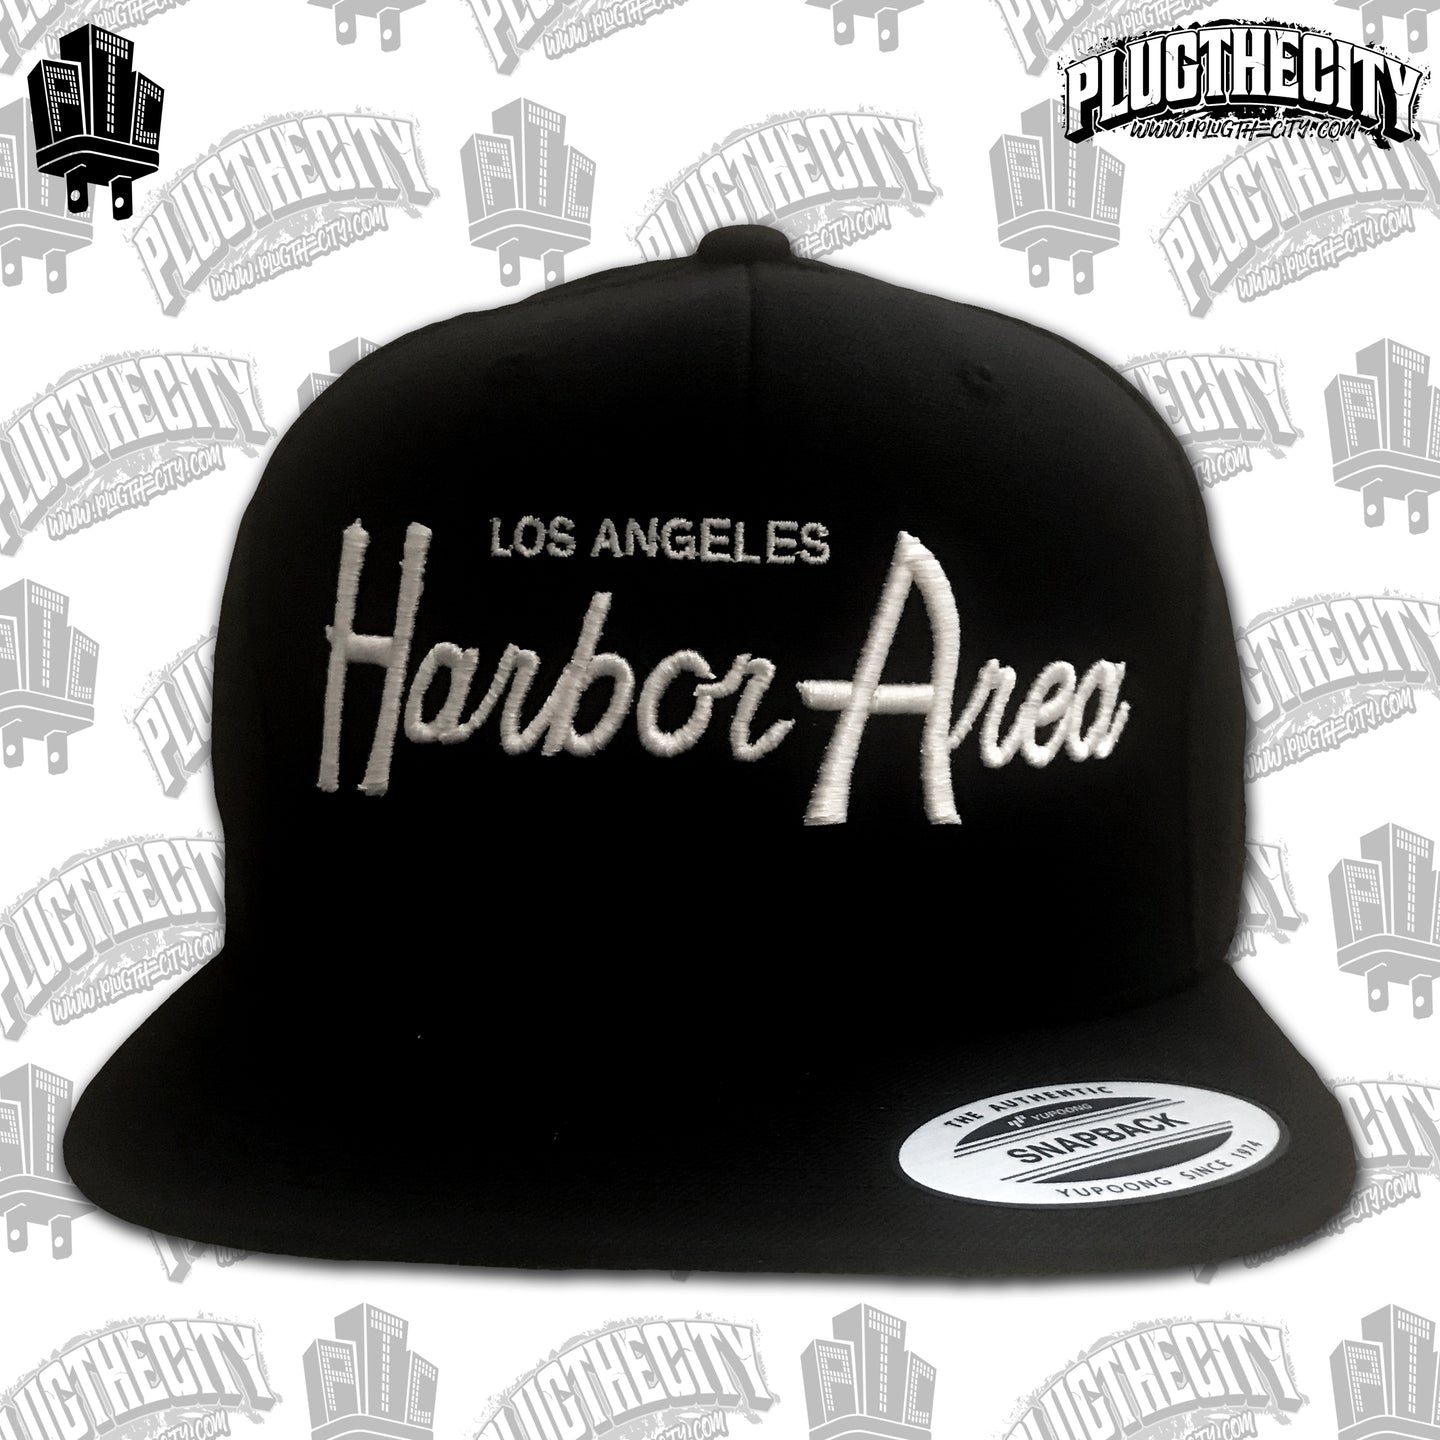 Harbor Area-Los Angeles-110 & PTC logos on the sides-snapback baseball hat-black